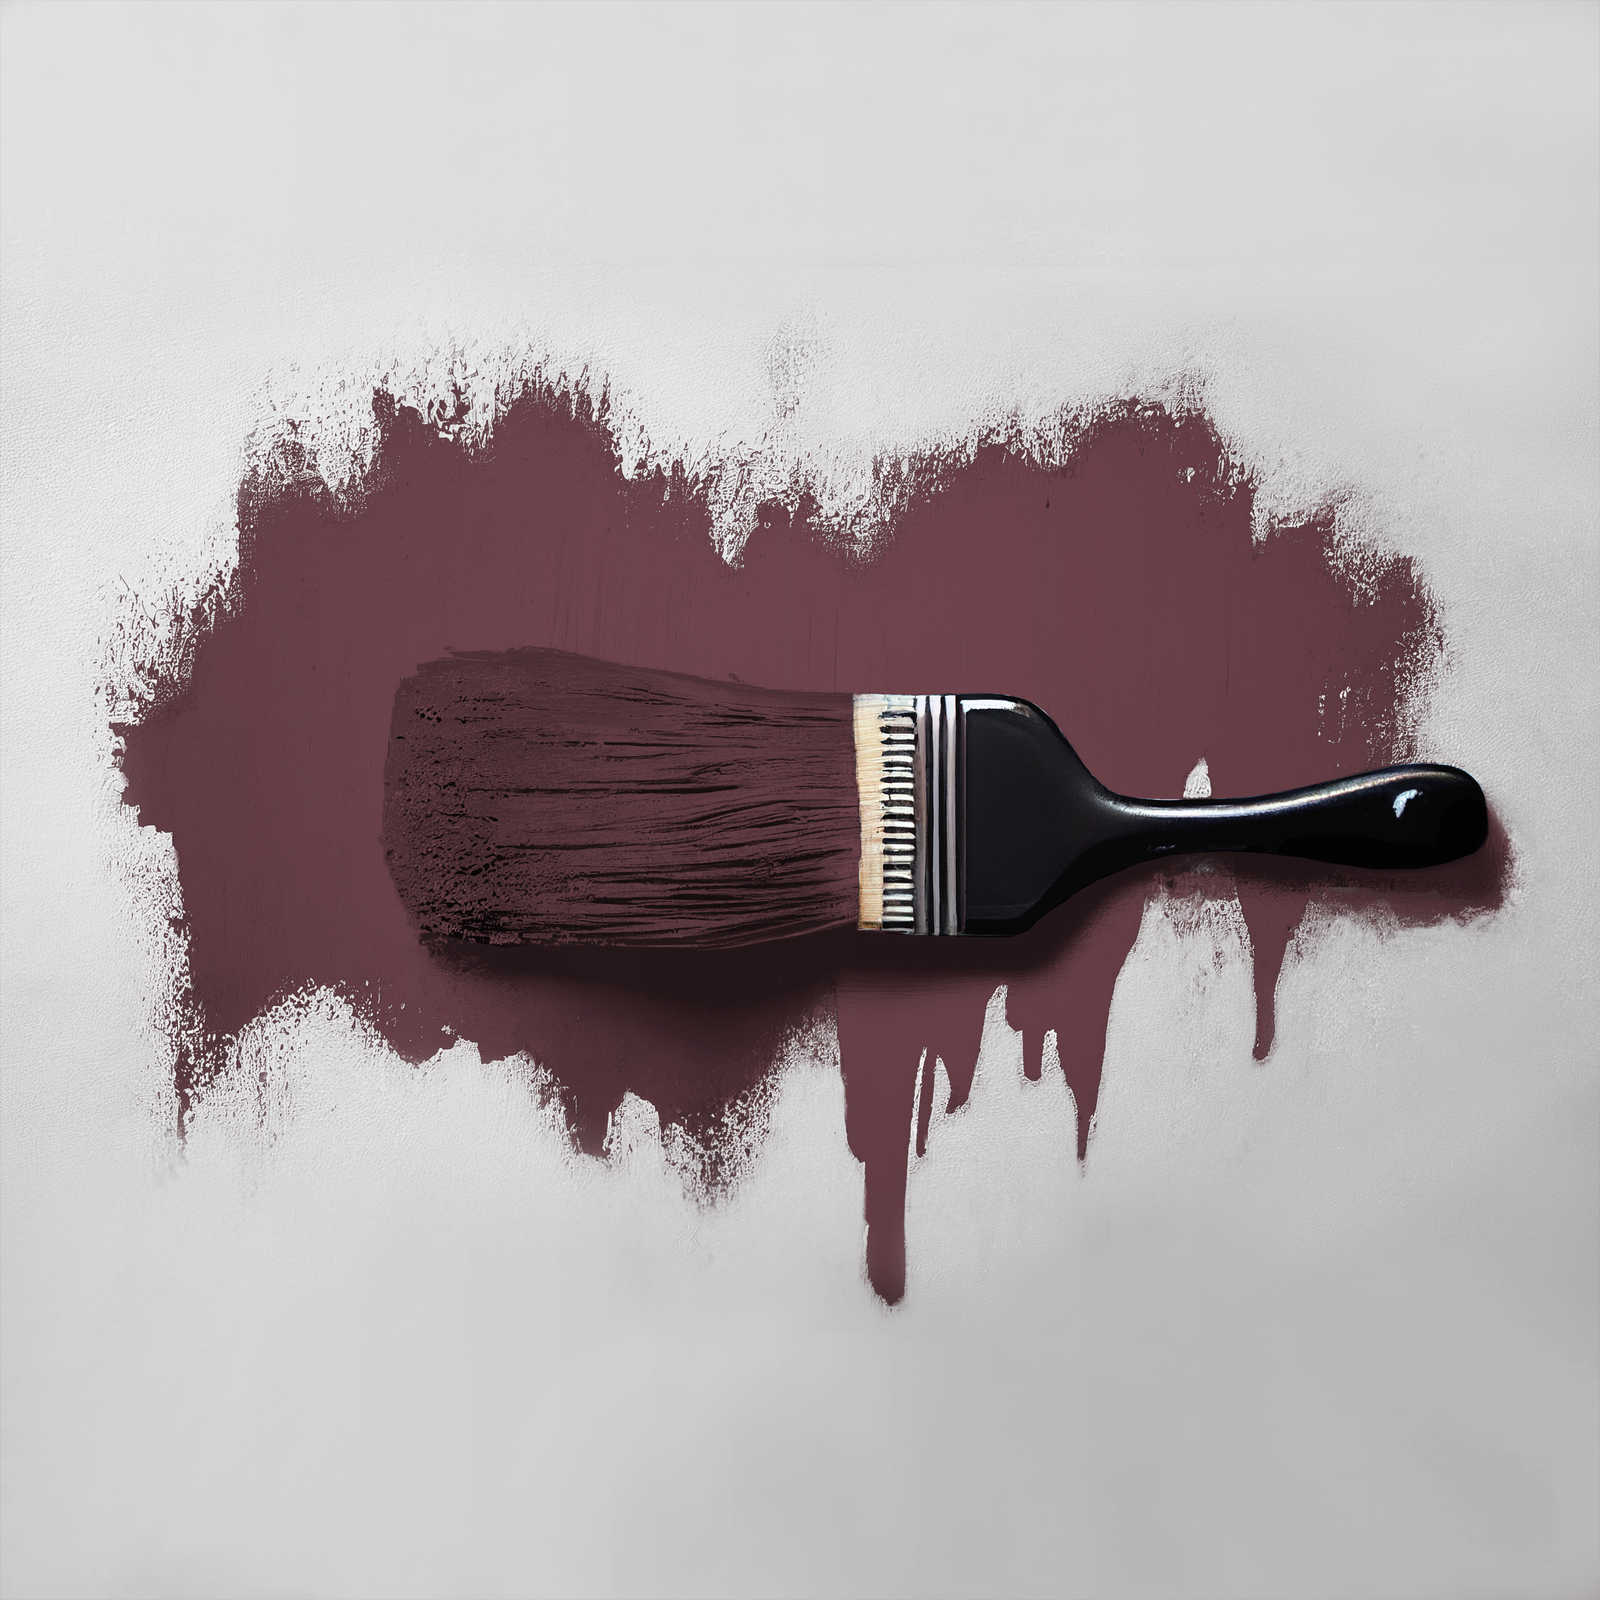             Wall Paint TCK7013 »Red Wine« in an intense bordeaux – 5.0 litre
        